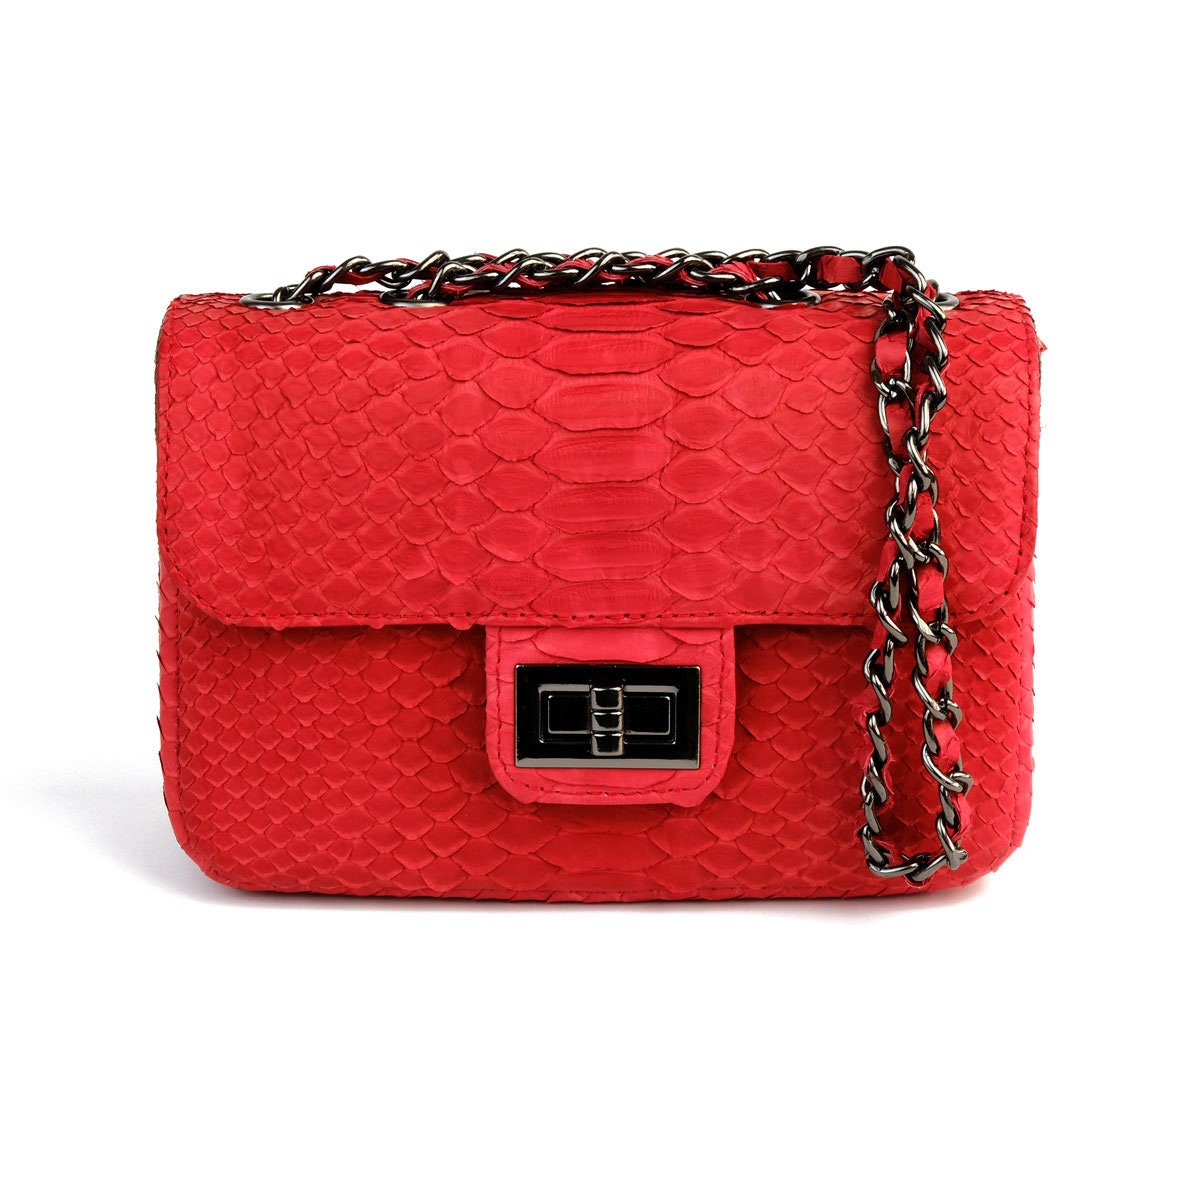 Scarlet Red Python Leather Cross Body Bag Snakeskin Bag - Etsy